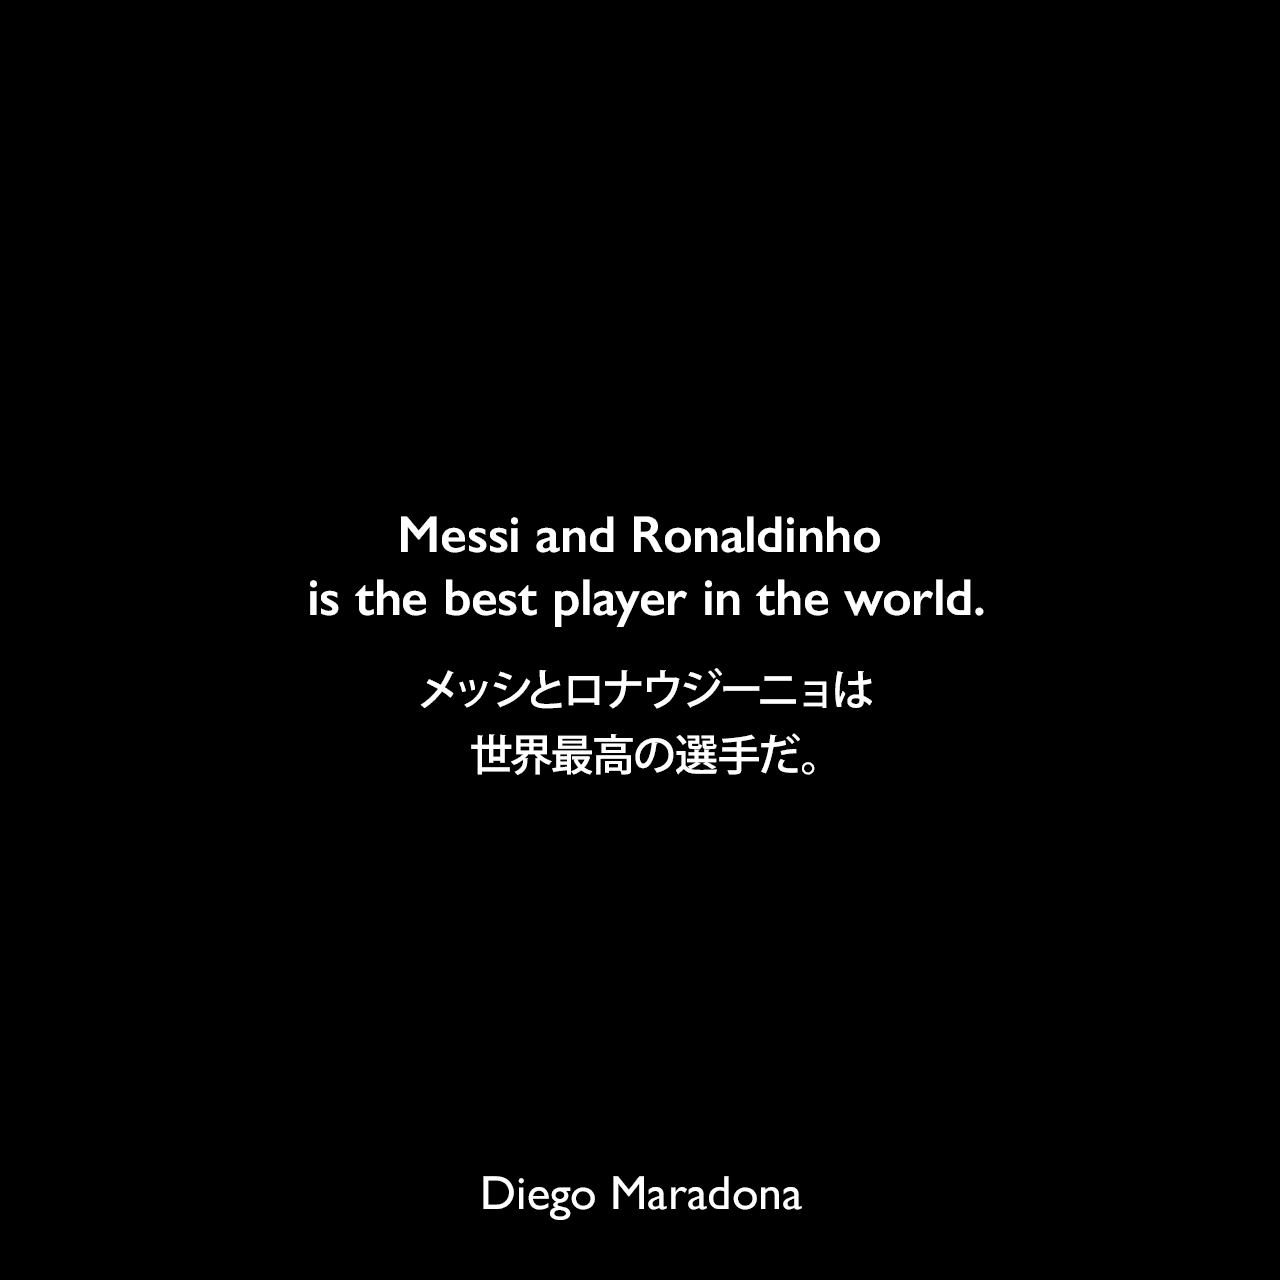 Messi and Ronaldinho is the best player in the world.メッシとロナウジーニョは世界最高の選手だ。Diego Maradona